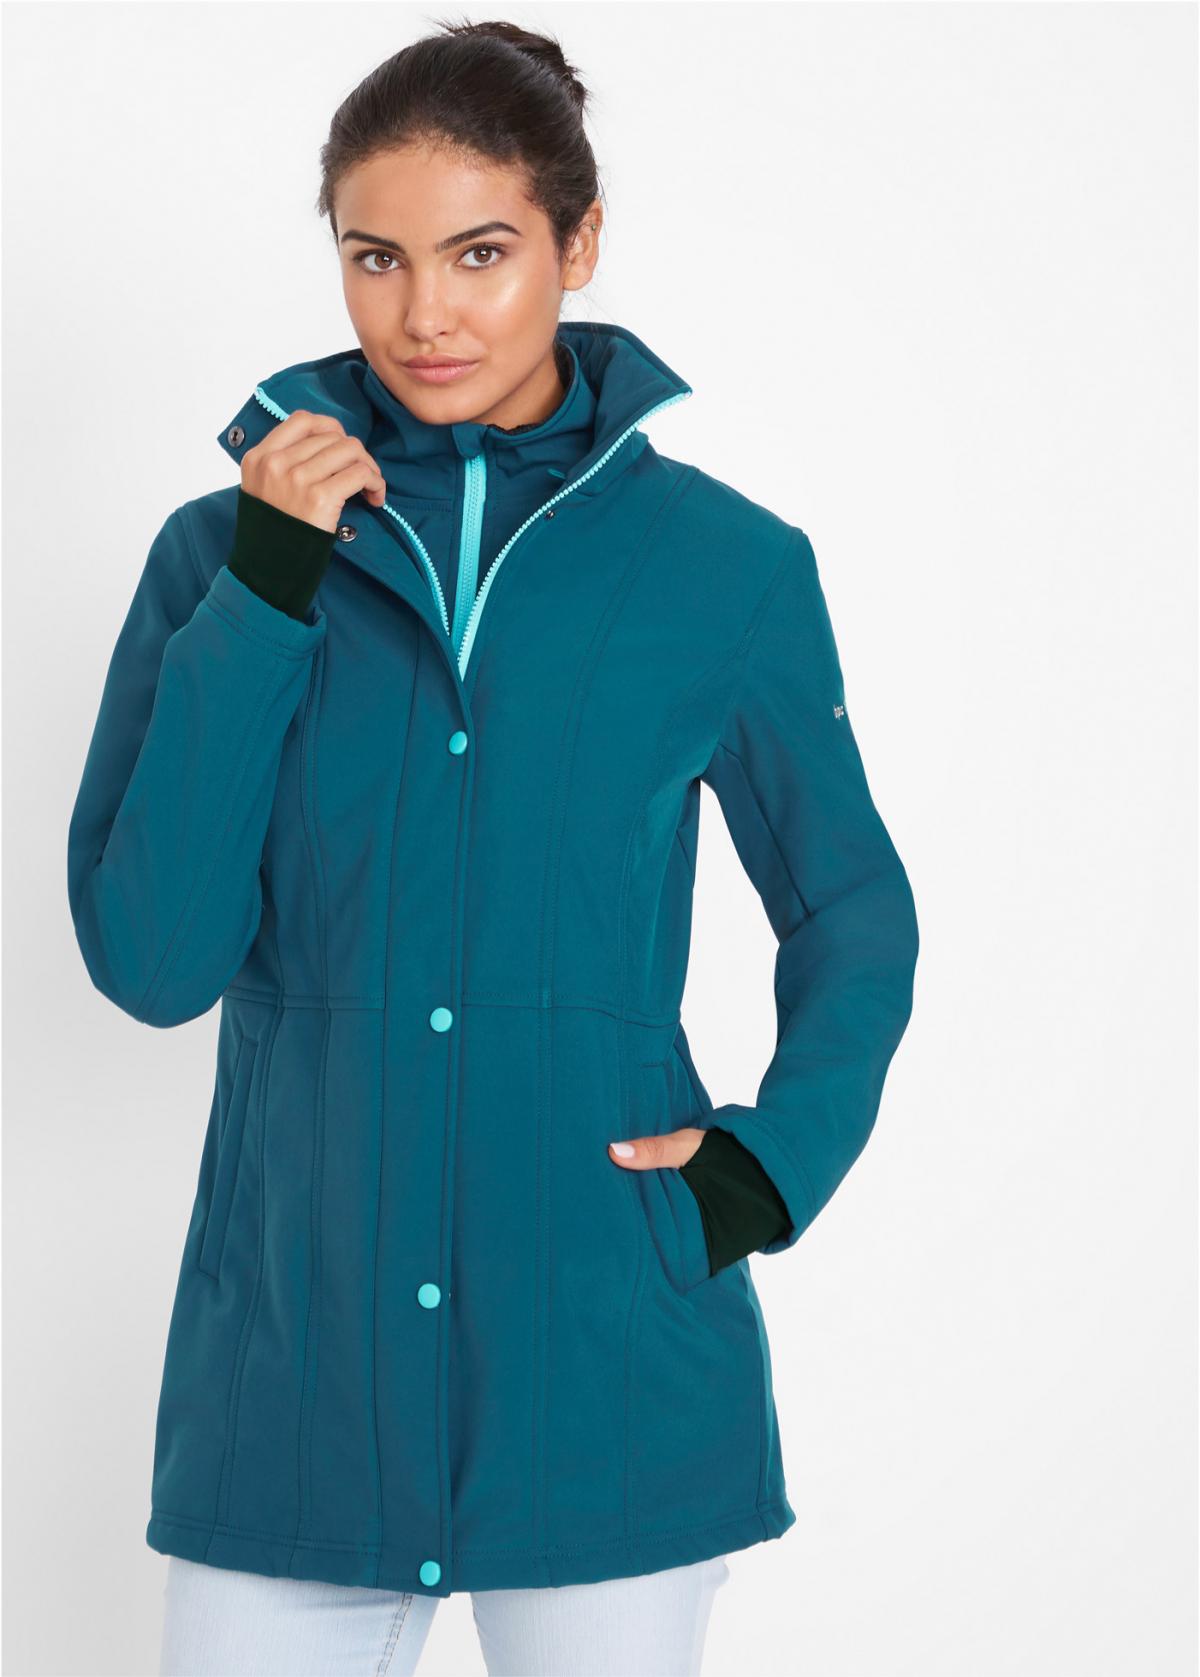 2xl outdoor chaqueta hüftlang B&c señora outdoor Softshell chaqueta función fibra XS